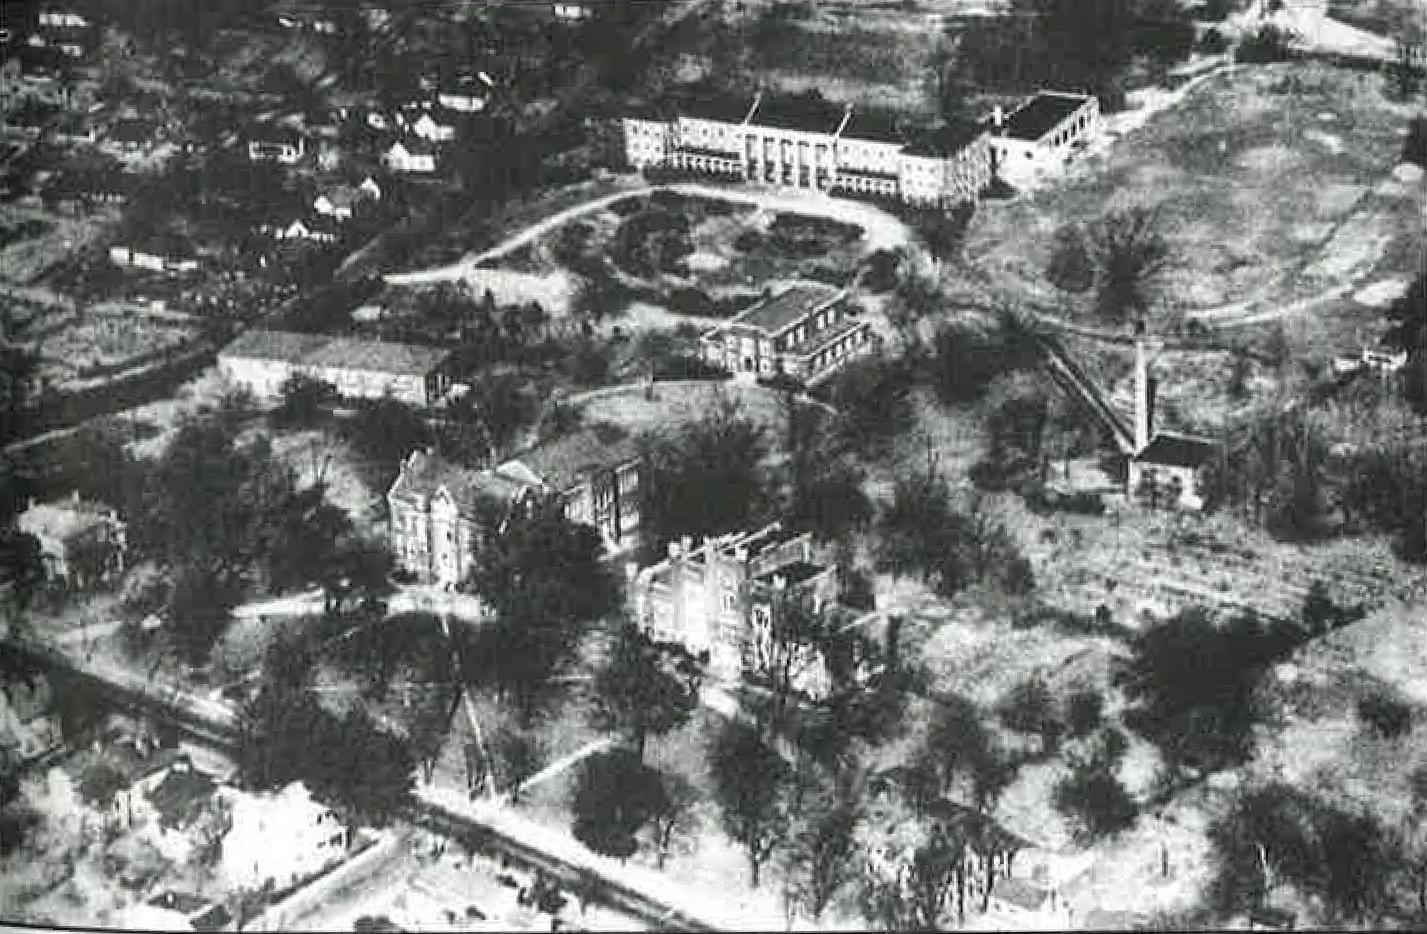 Harned Hall, pictured top middle, 这张1935年左右的航拍照片中唯一屹立不倒的建筑是什么.